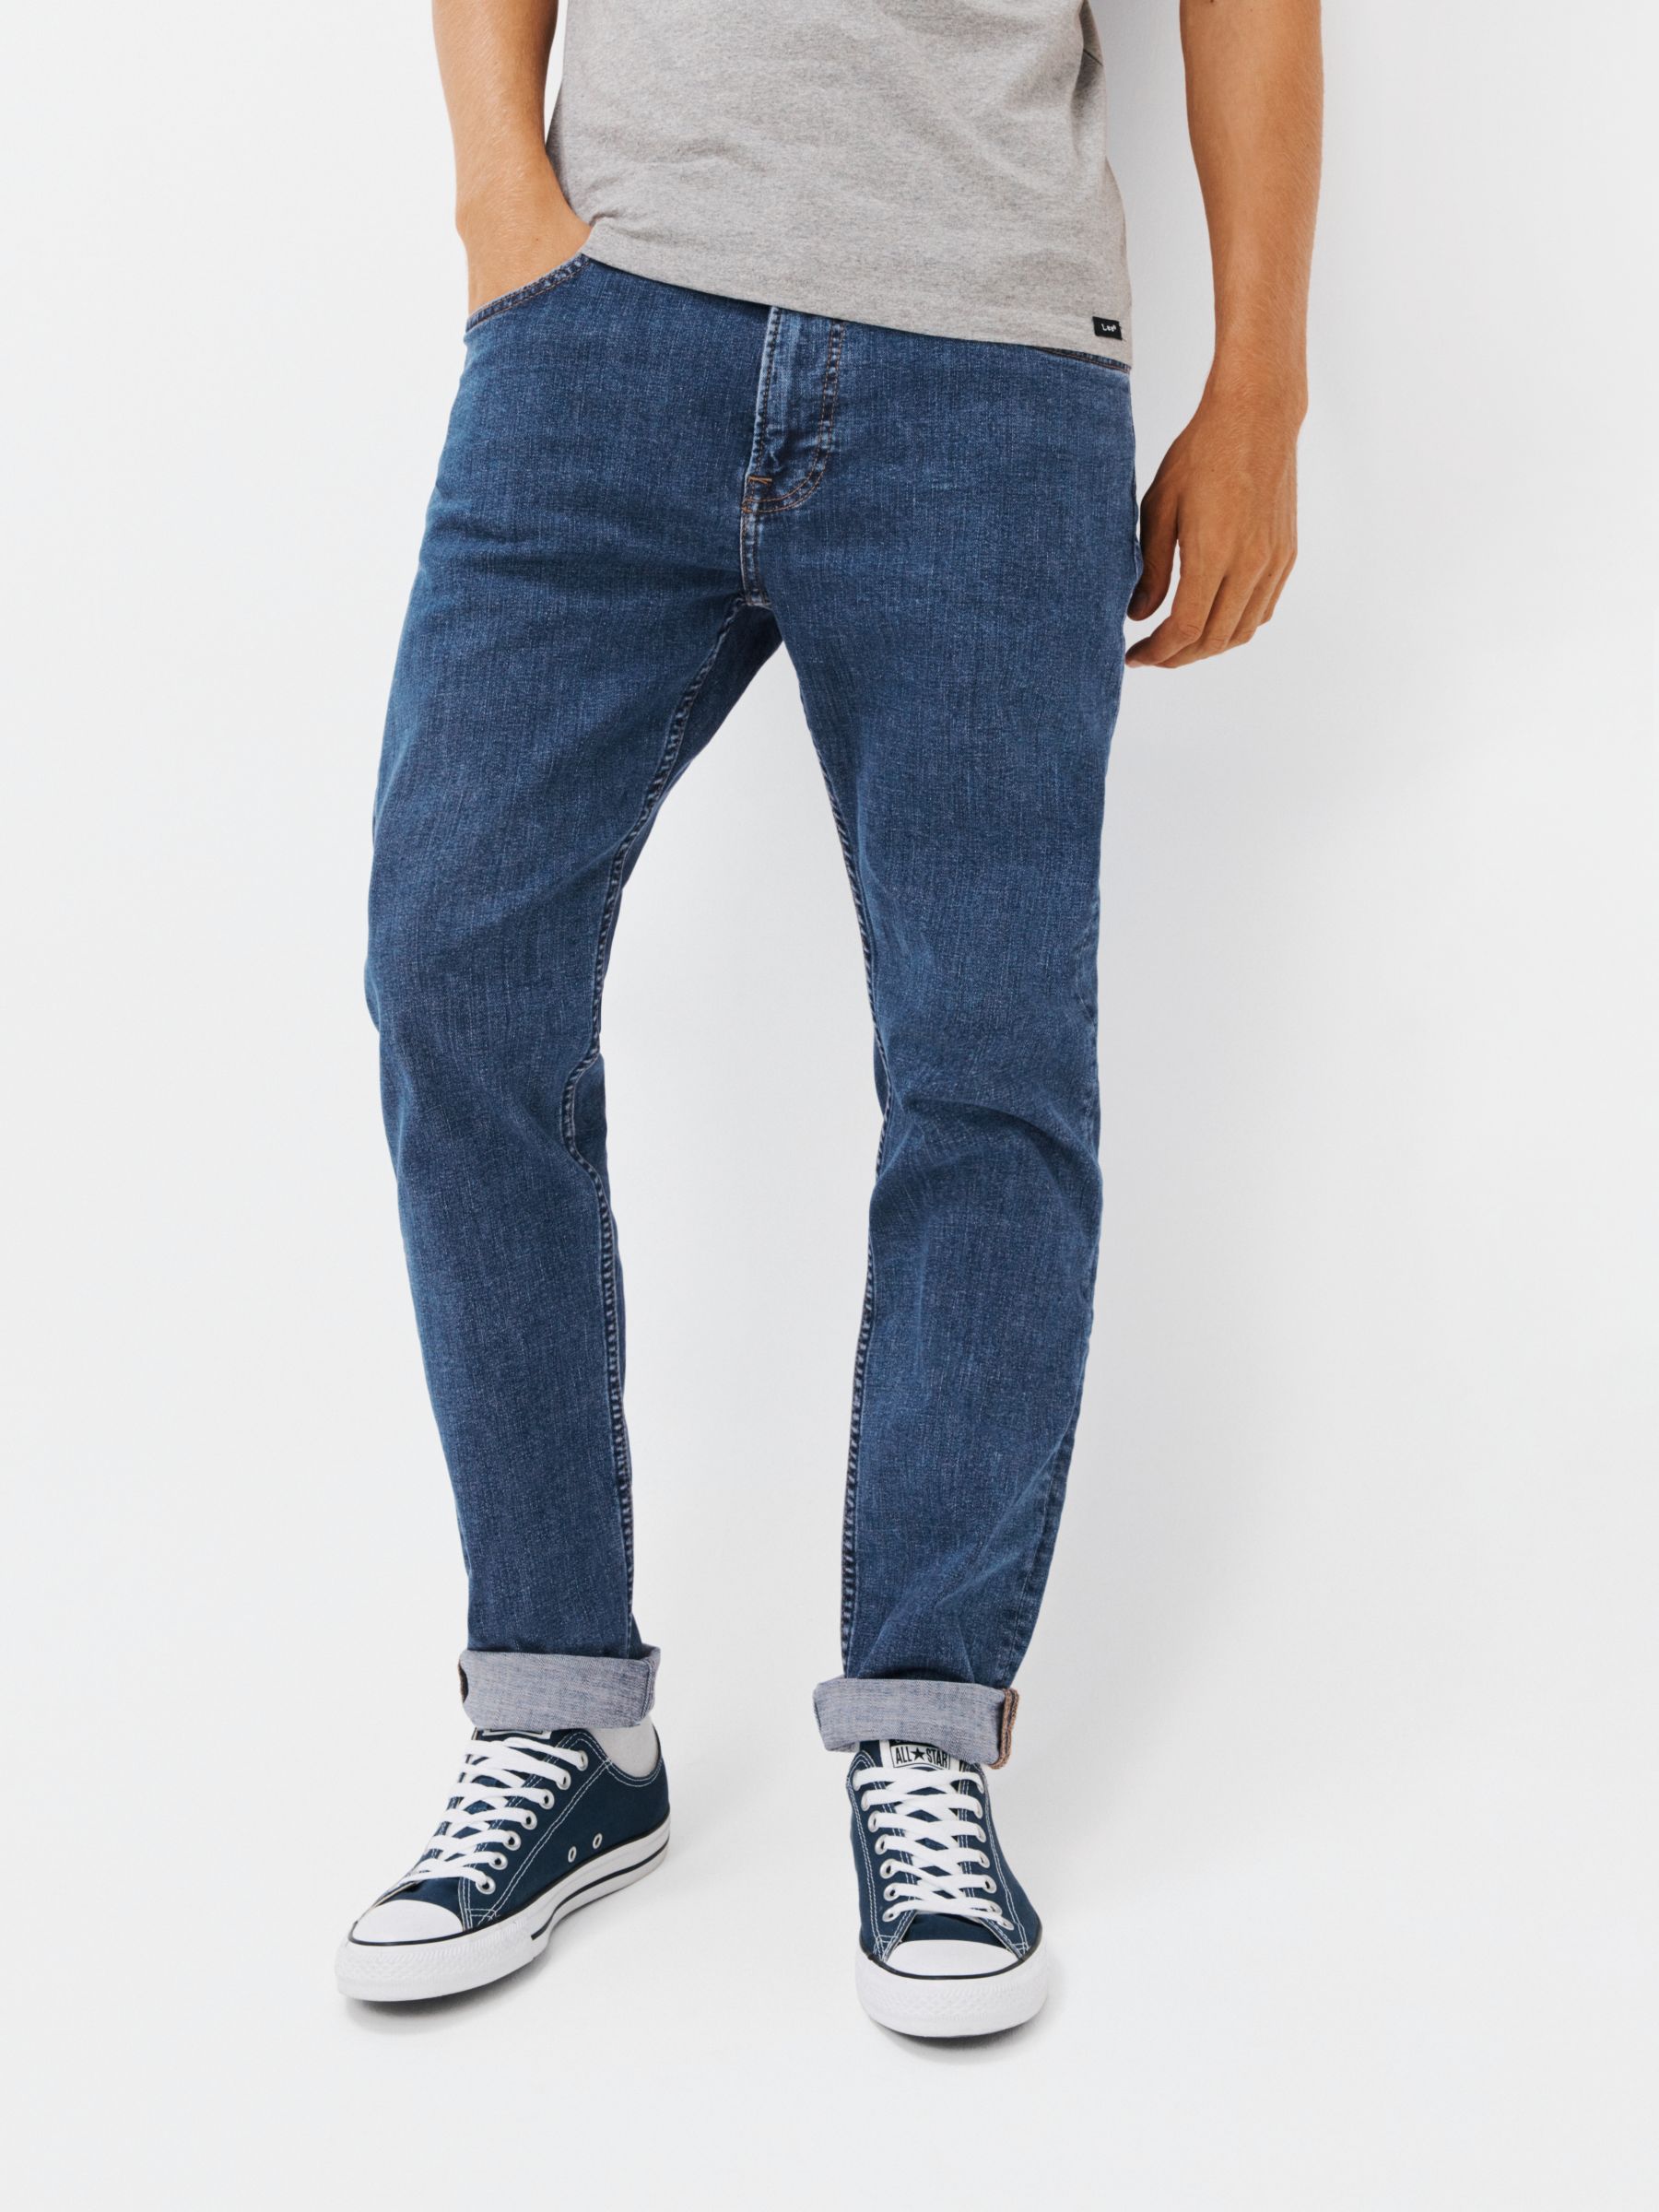 Lee Rider Slim Fit Denim Jeans, Blue at John Lewis & Partners